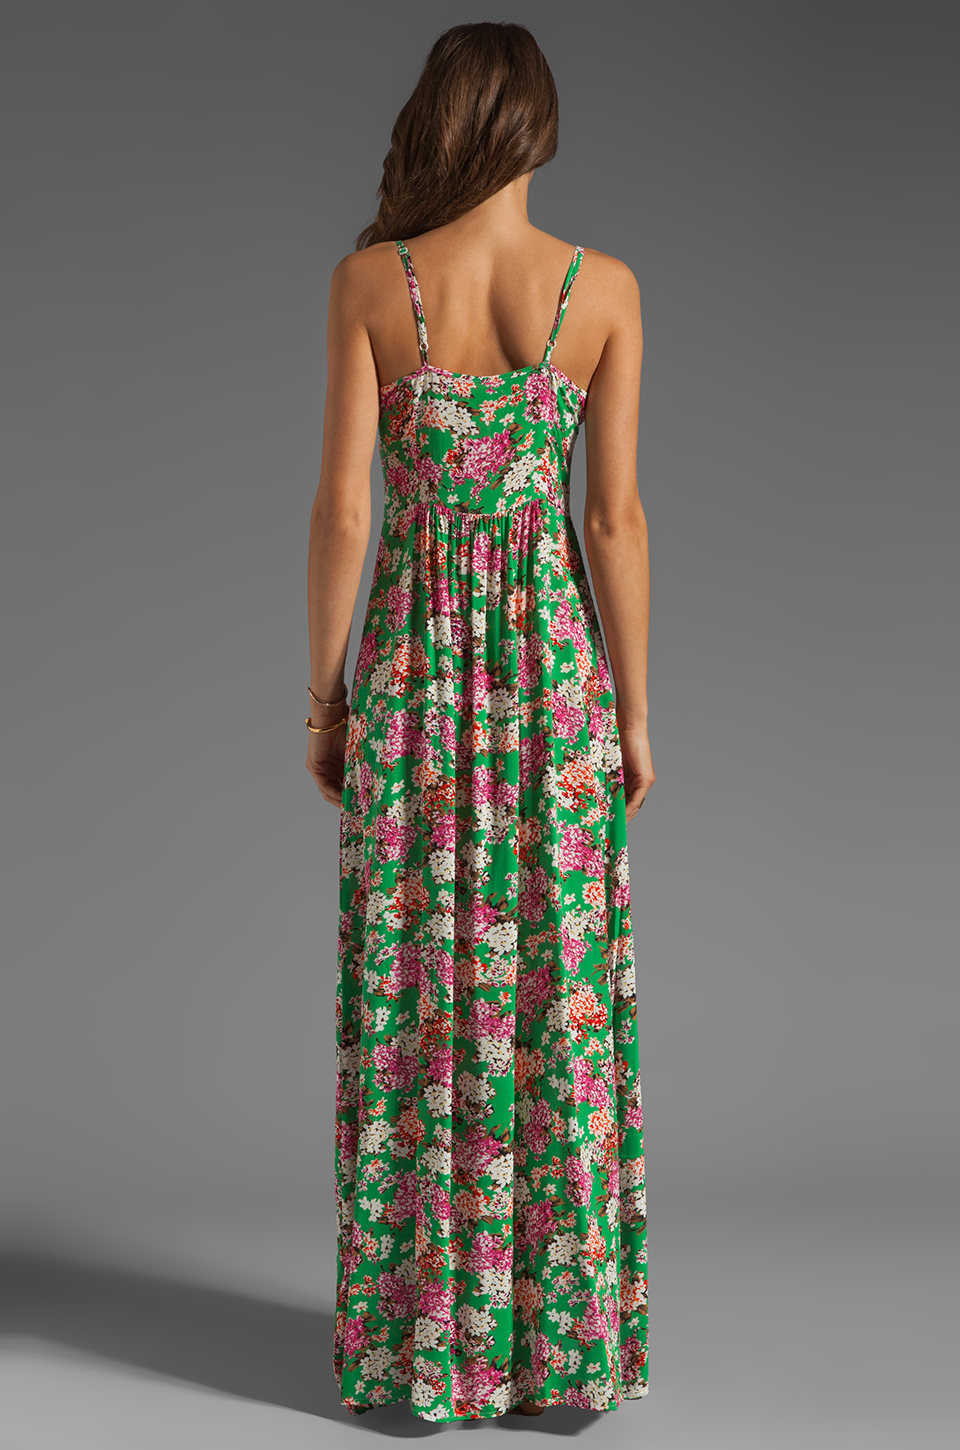 Lyst - Jarlo Vanessa Floral Maxi Dress in Green